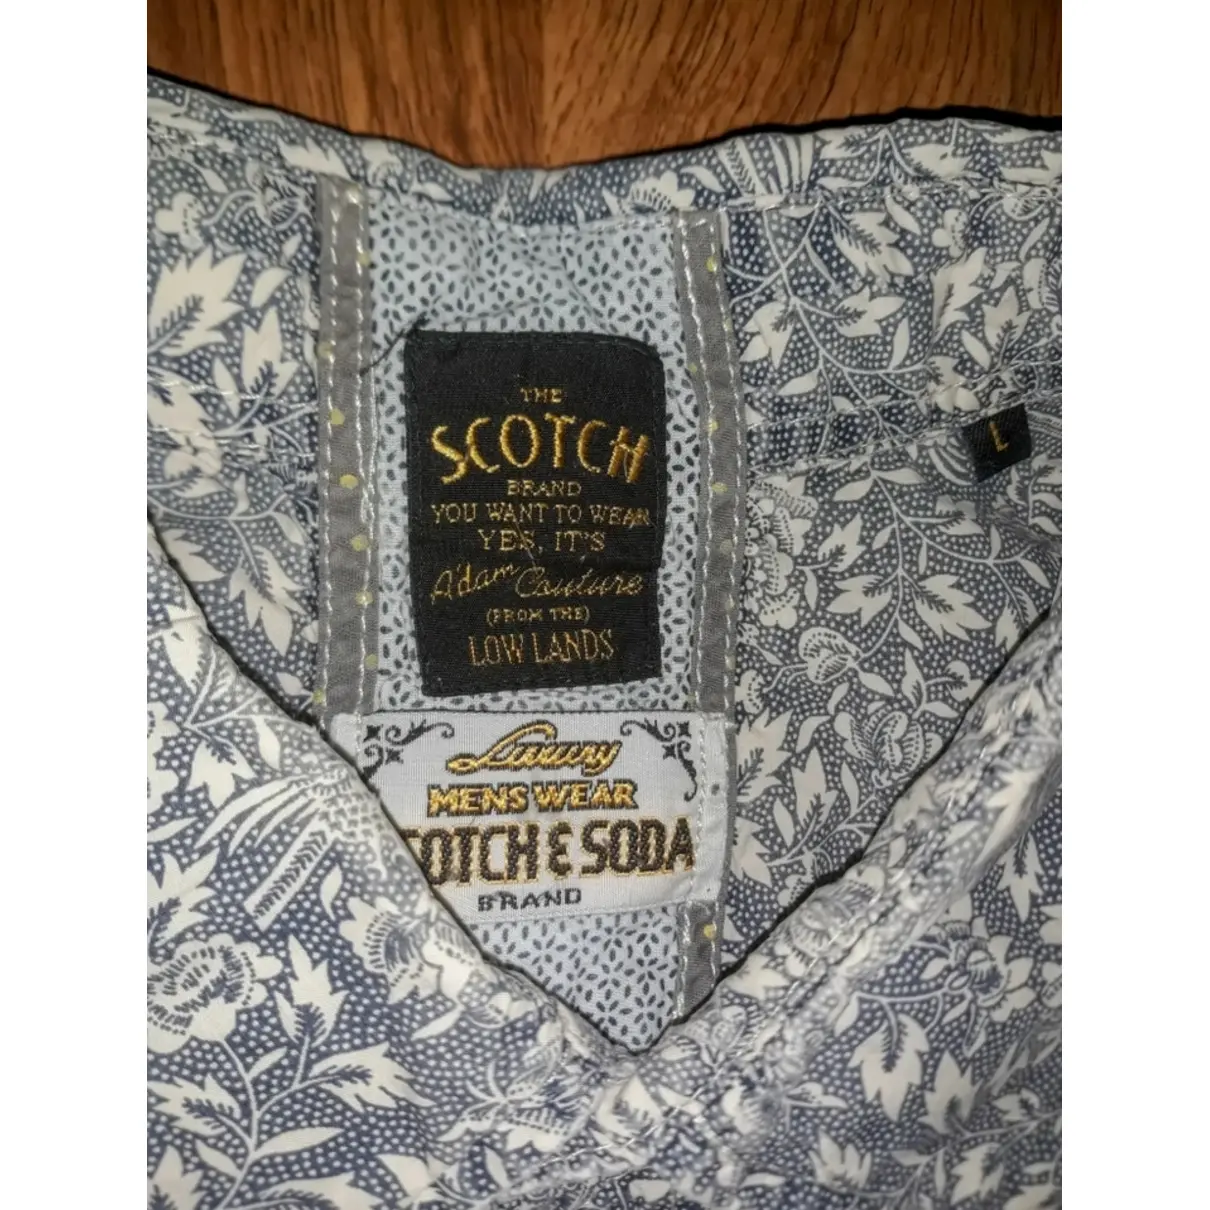 Buy Scotch & Soda Shirt online